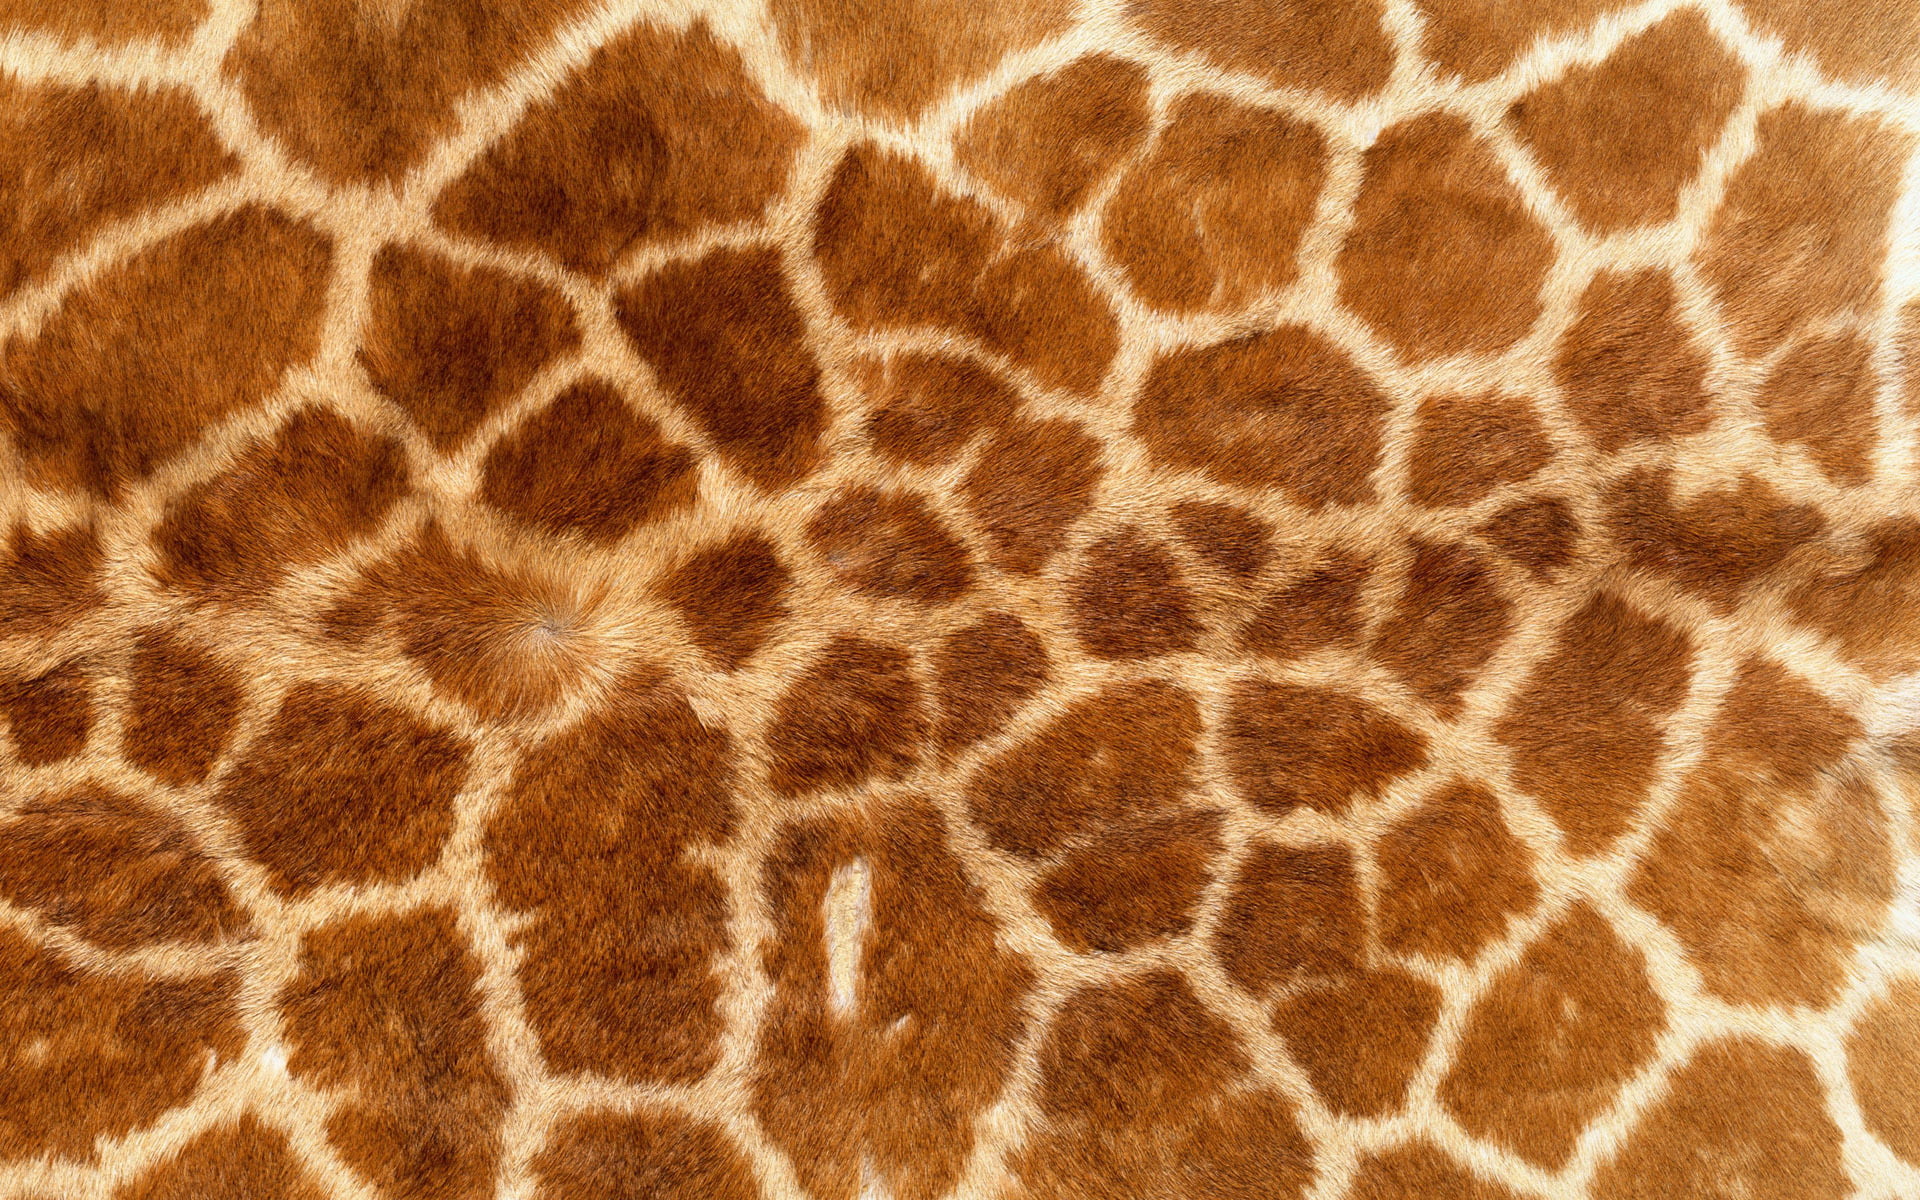 giraffe fur, background, Wallpaper, texture, skin, safari Animals